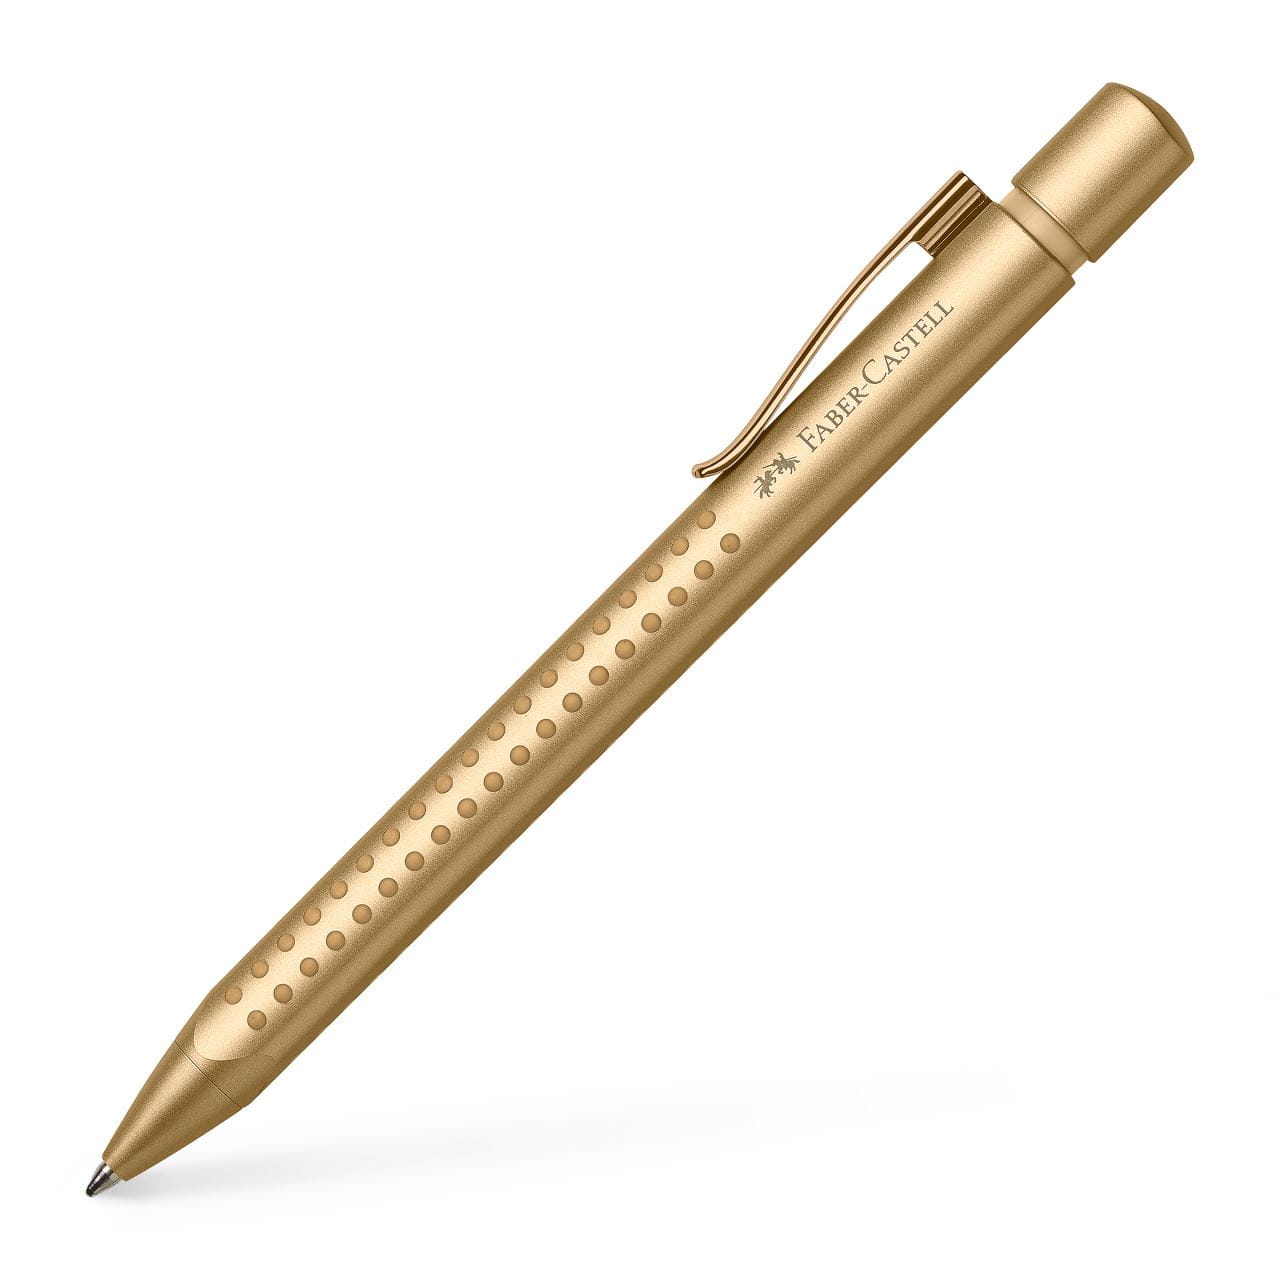 Faber-Castell - Στυλό Grip Edition, XB, χρυσό